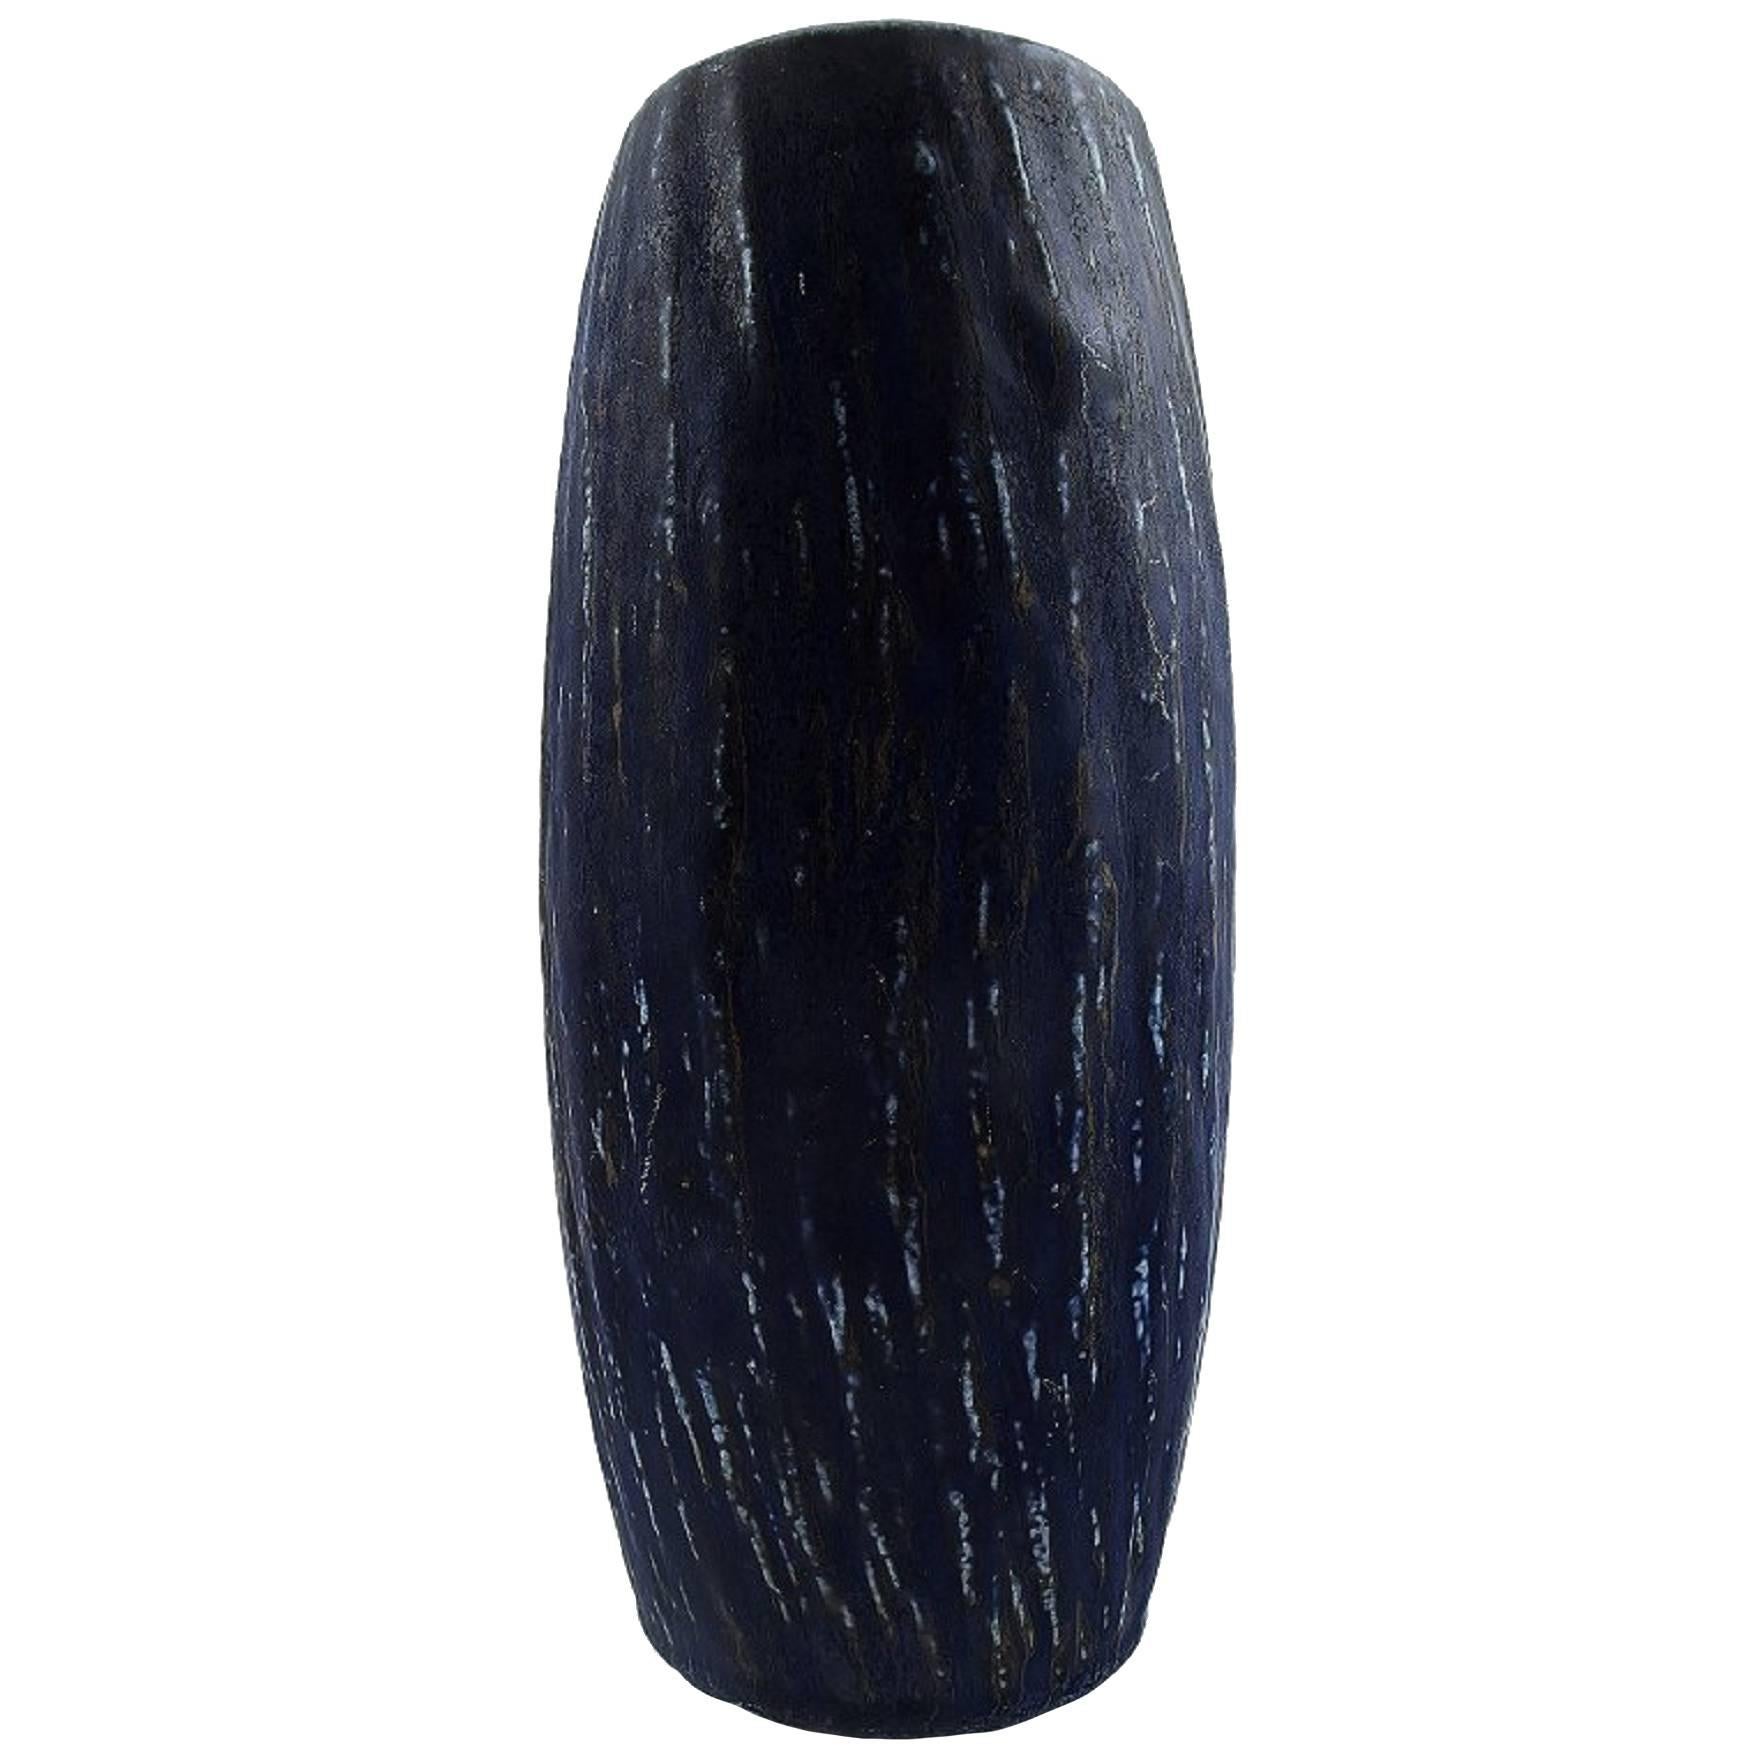 Rörstrand, Gunnar Nylund "Rubus" Ceramic Vase in Blue Glaze